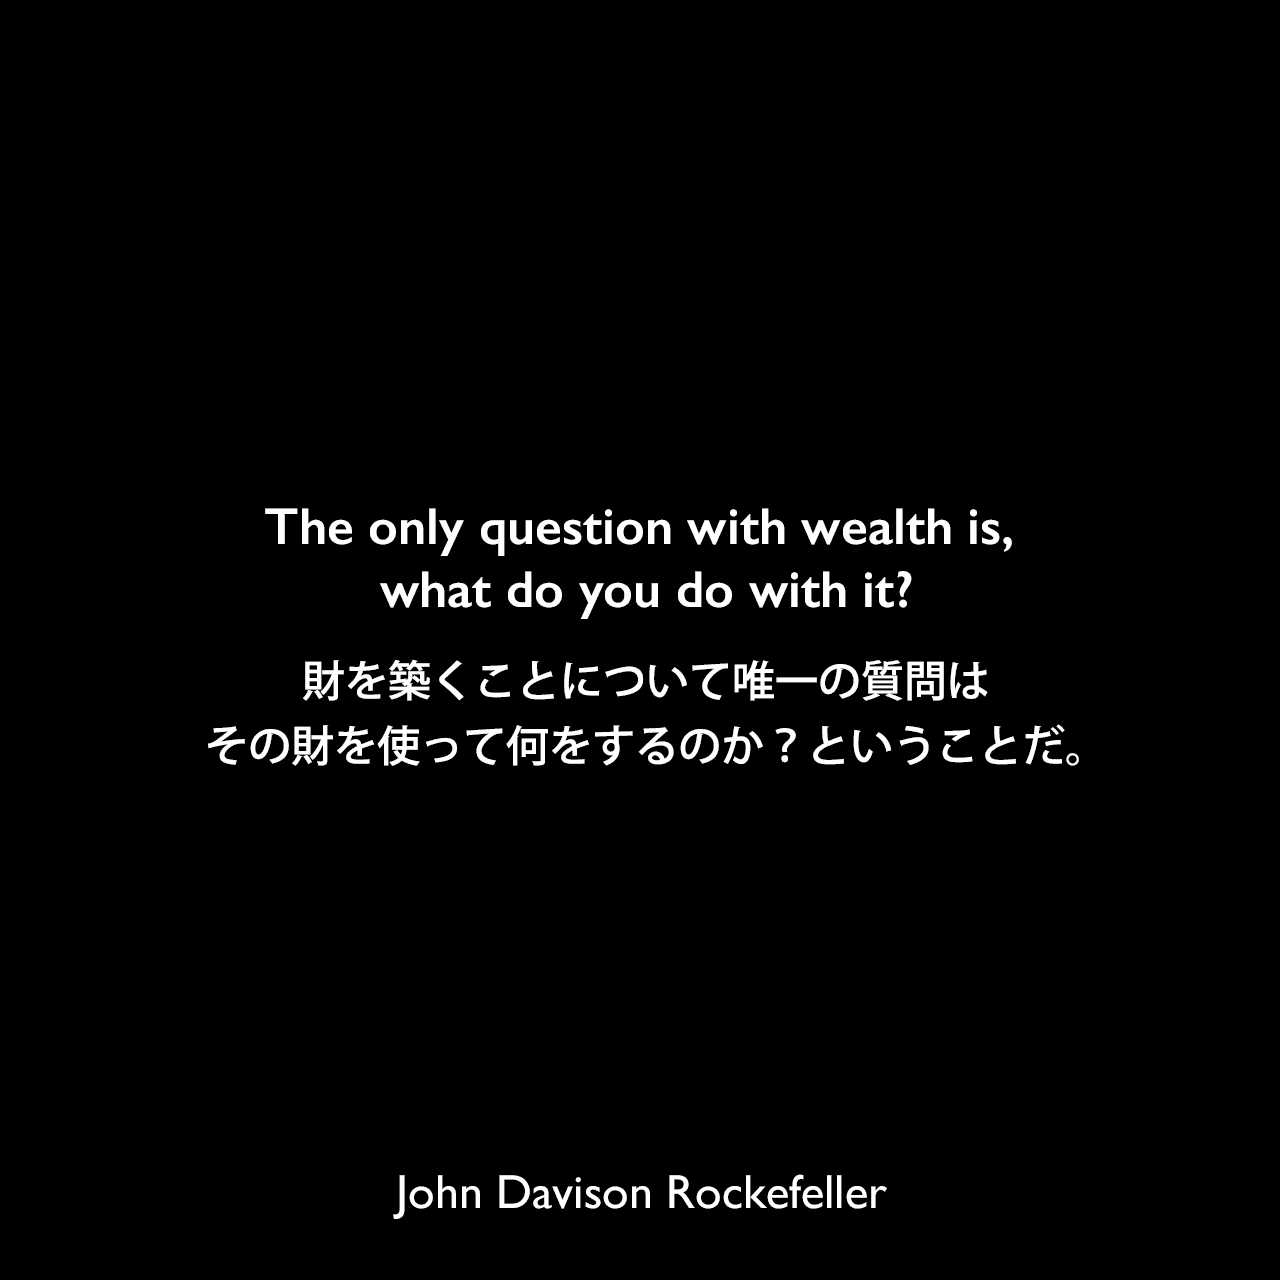 The only question with wealth is, what do you do with it?財を築くことについて唯一の質問は、その財を使って何をするのか？ということだ。John Davison Rockefeller